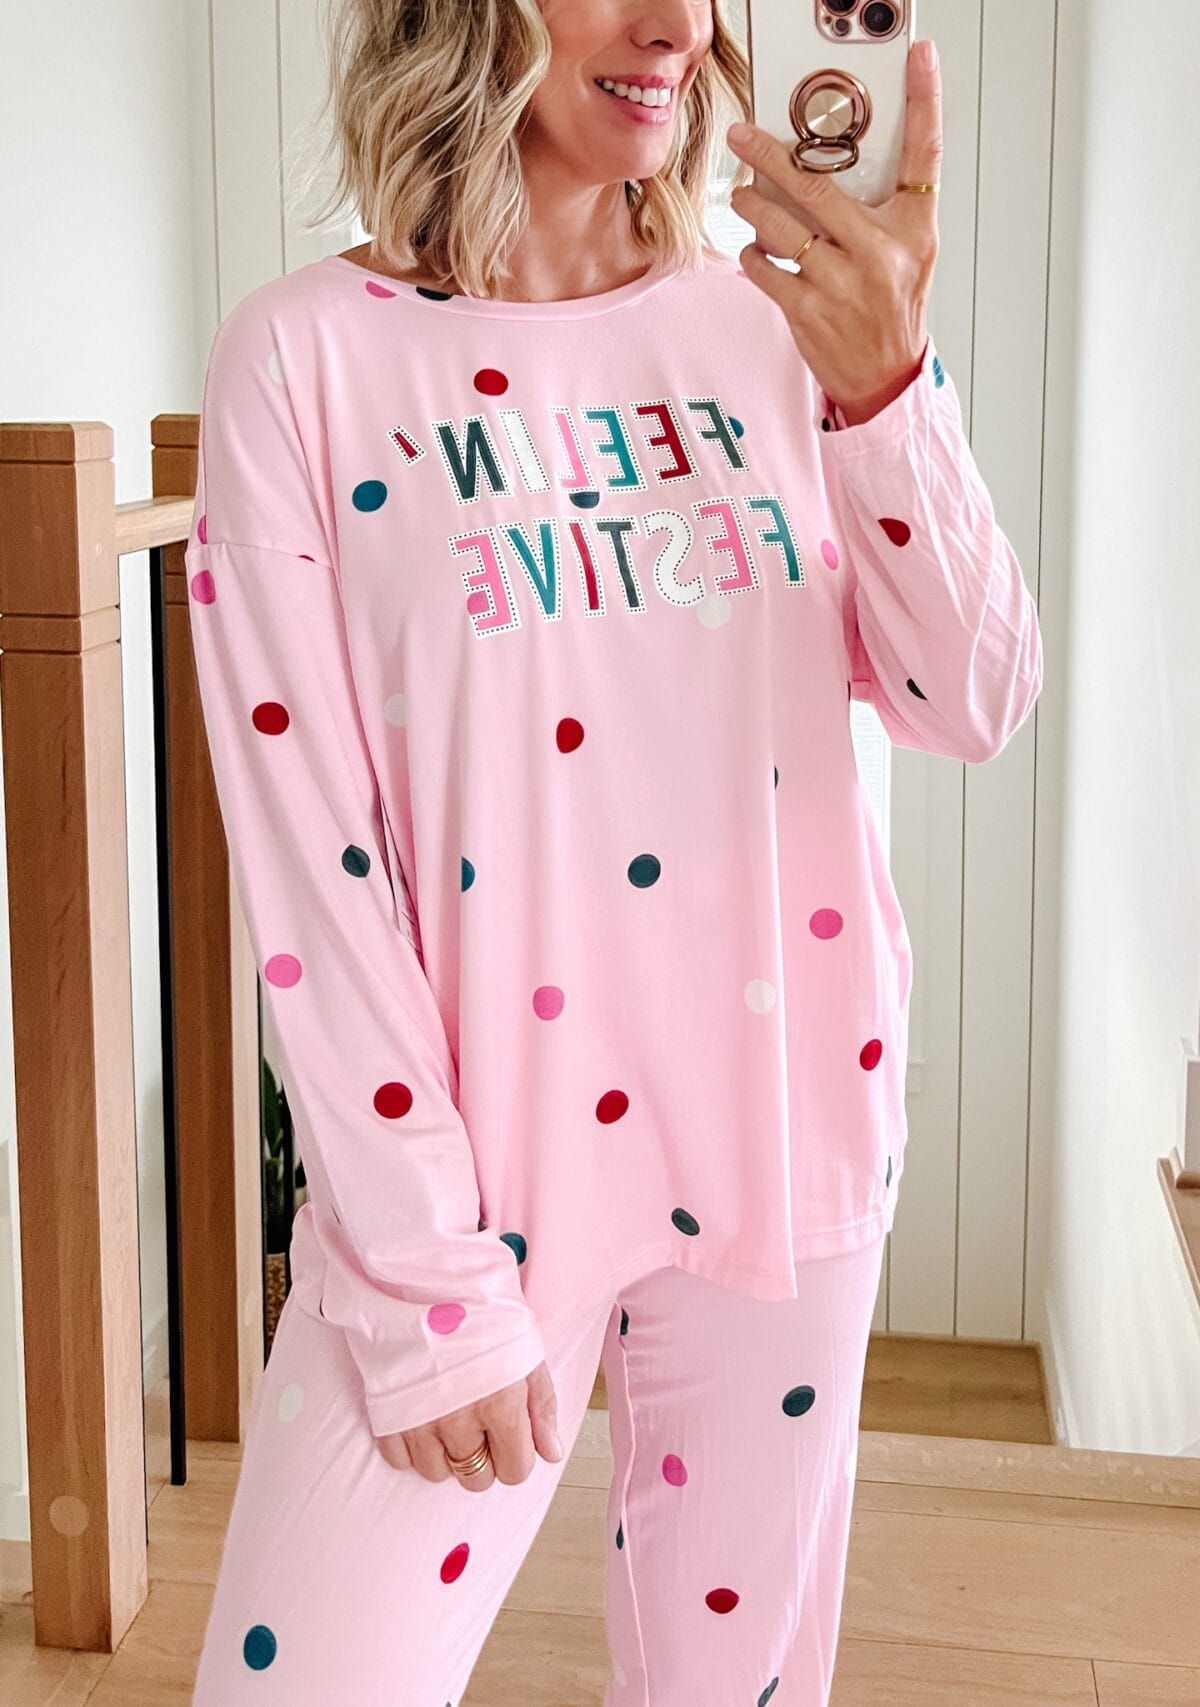 Walmart holiday women's pajamas